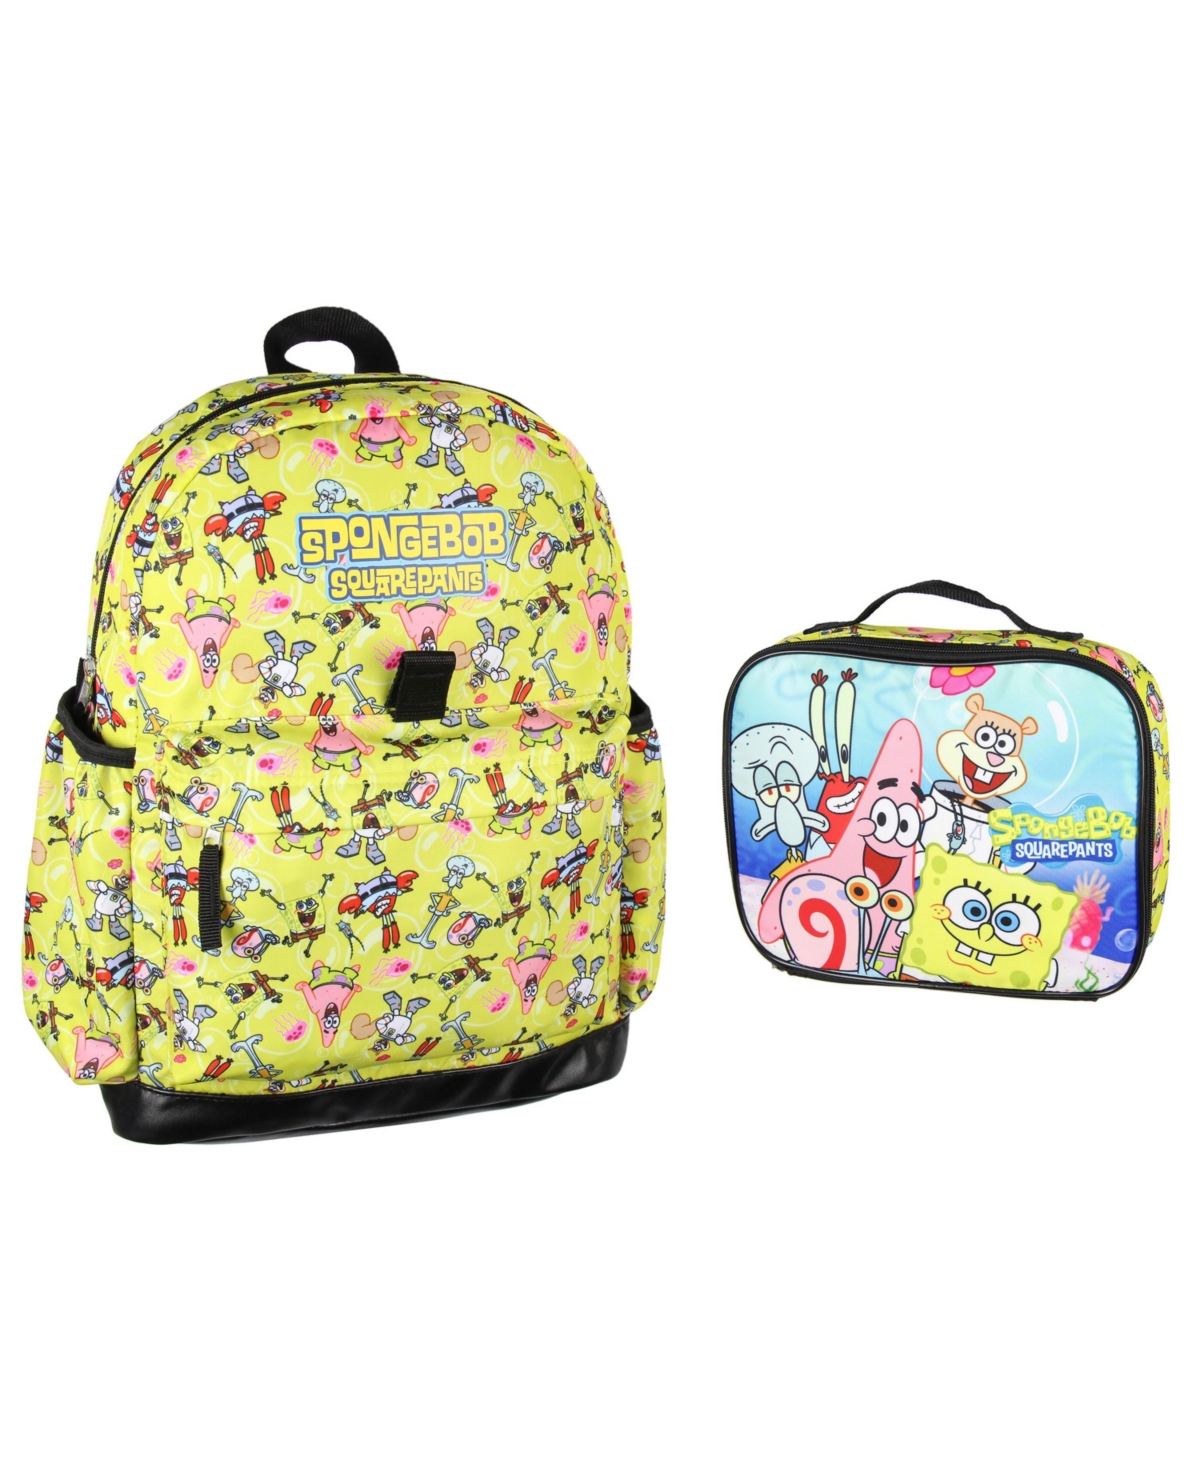 Nickelodeon Characters Patrick Star Sandy Cheeks Mr. Krabs Squidward 2 Pc Lunch Box Backpack Bag Set - Yellow